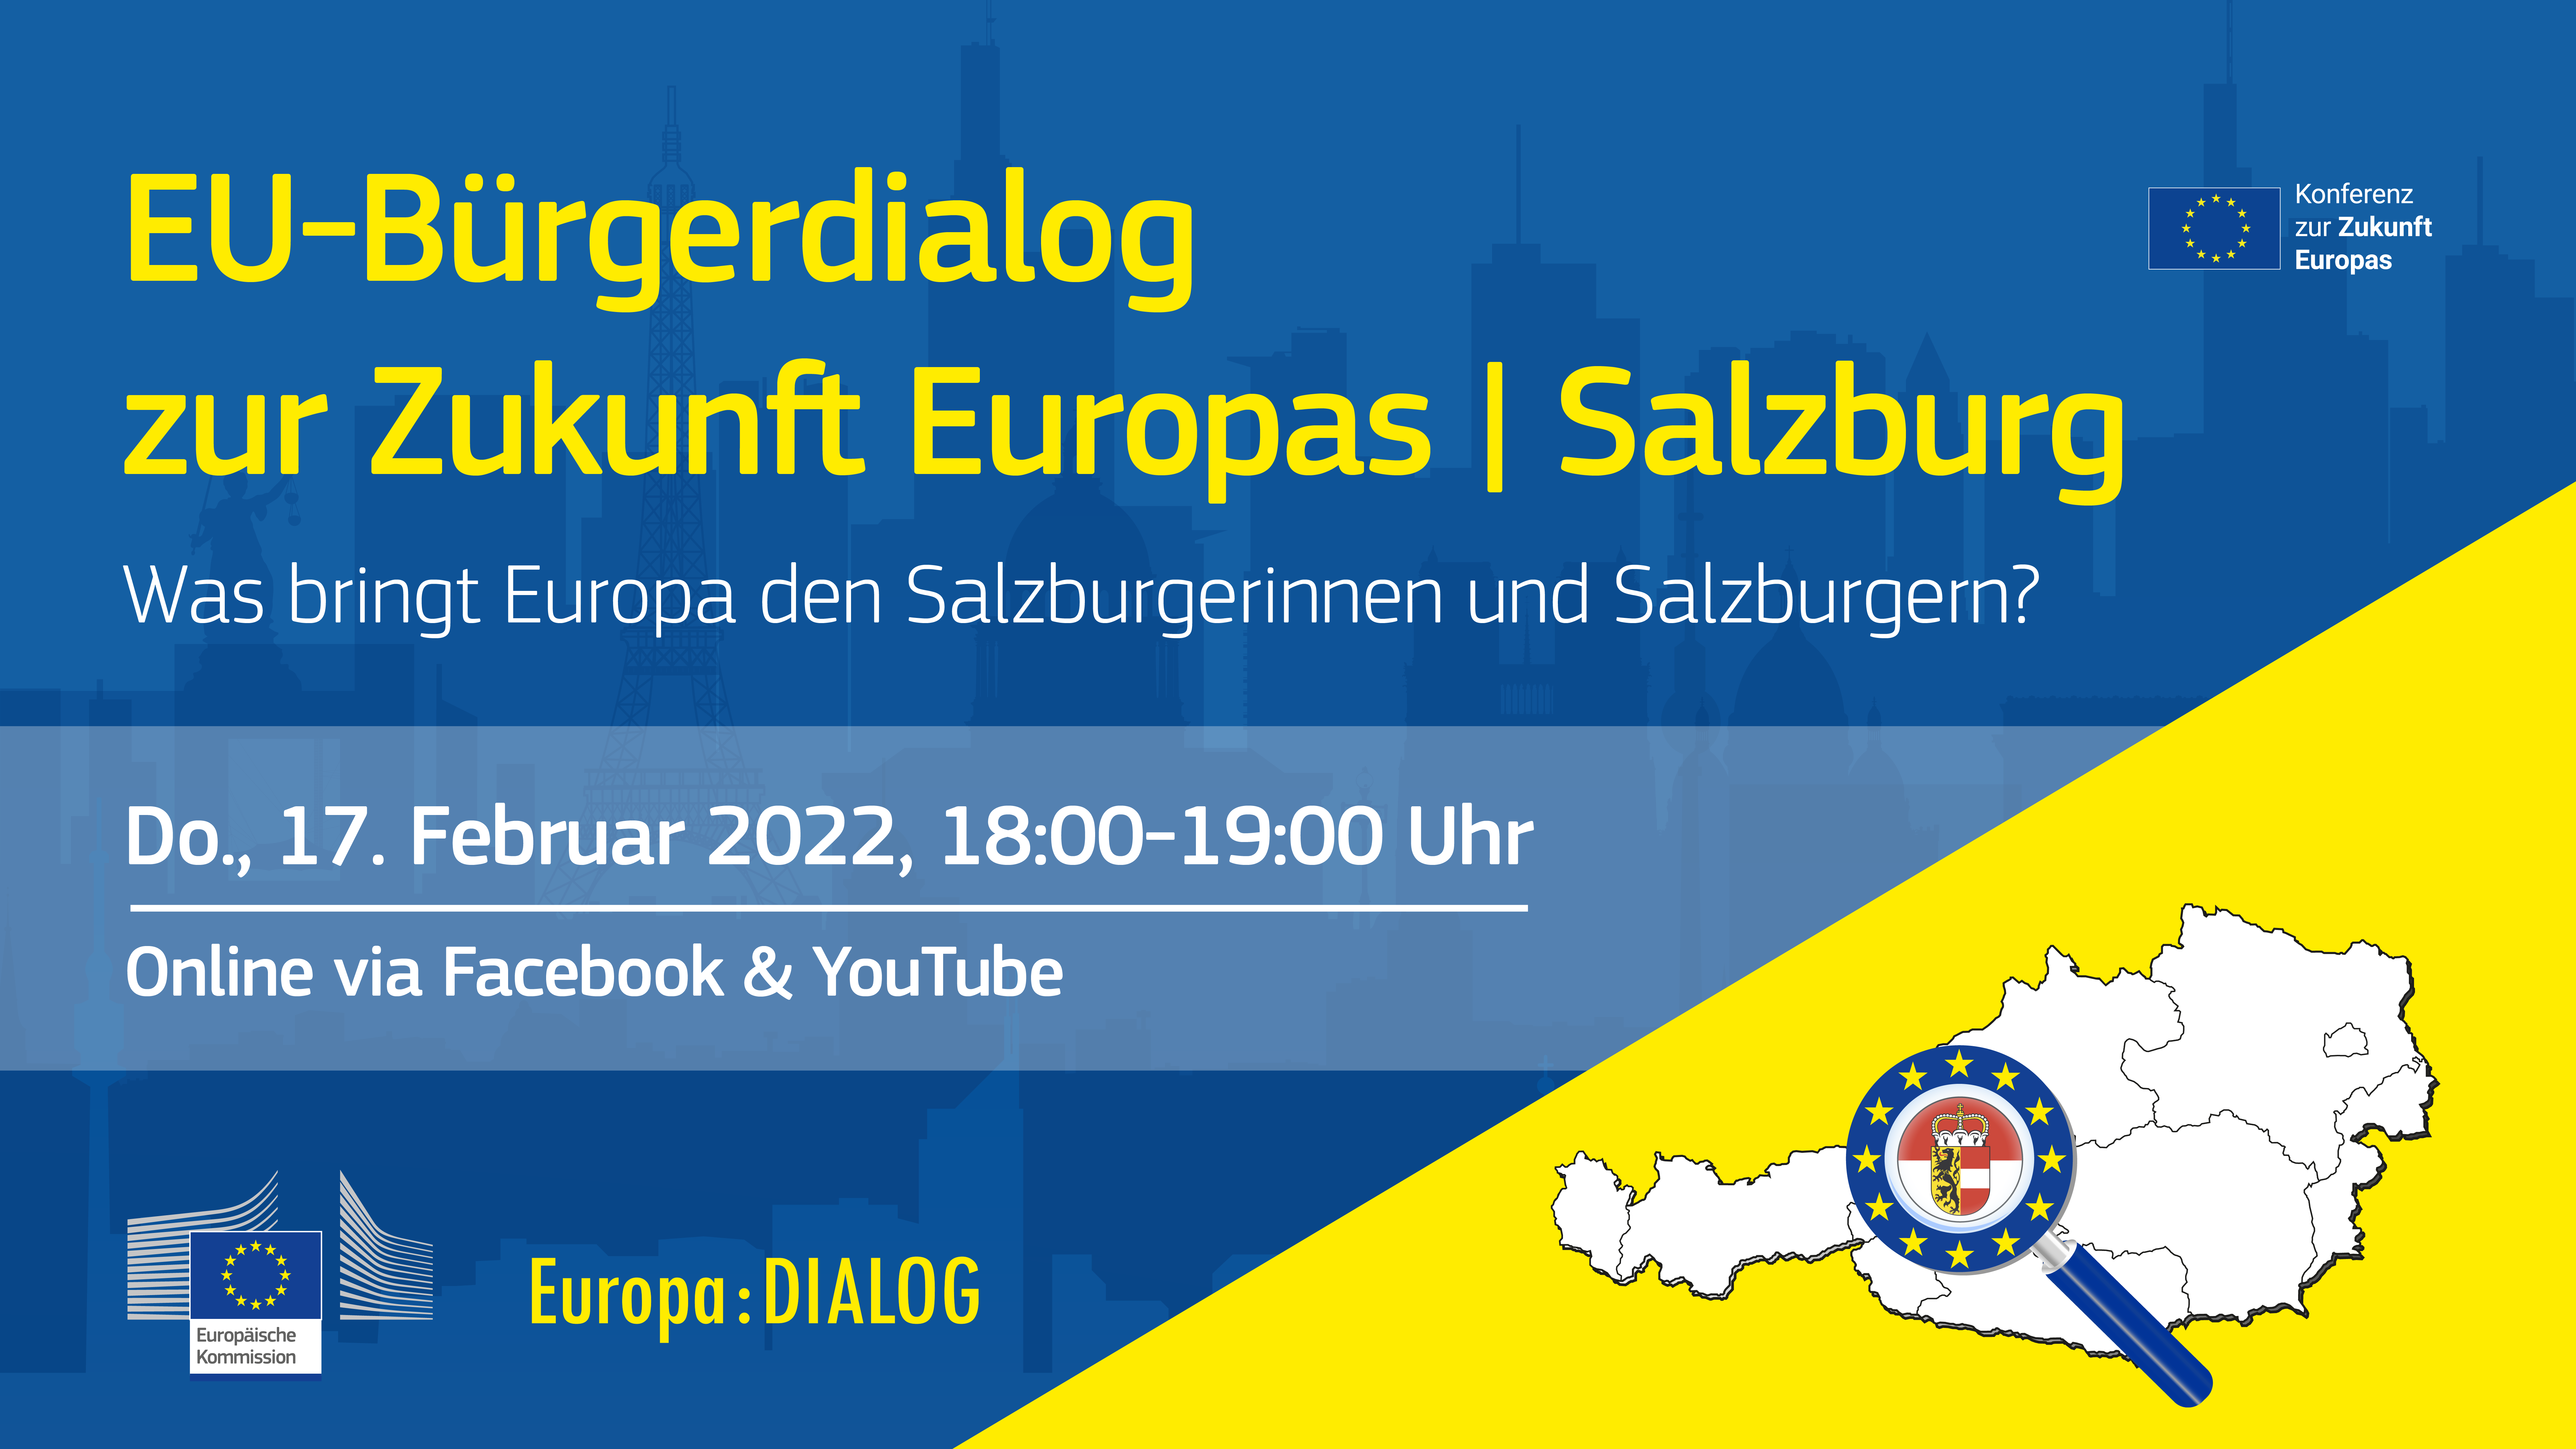 Europa : DIALOG | EU-Bürgerdialog zur Zukunft Europas | Salzburg